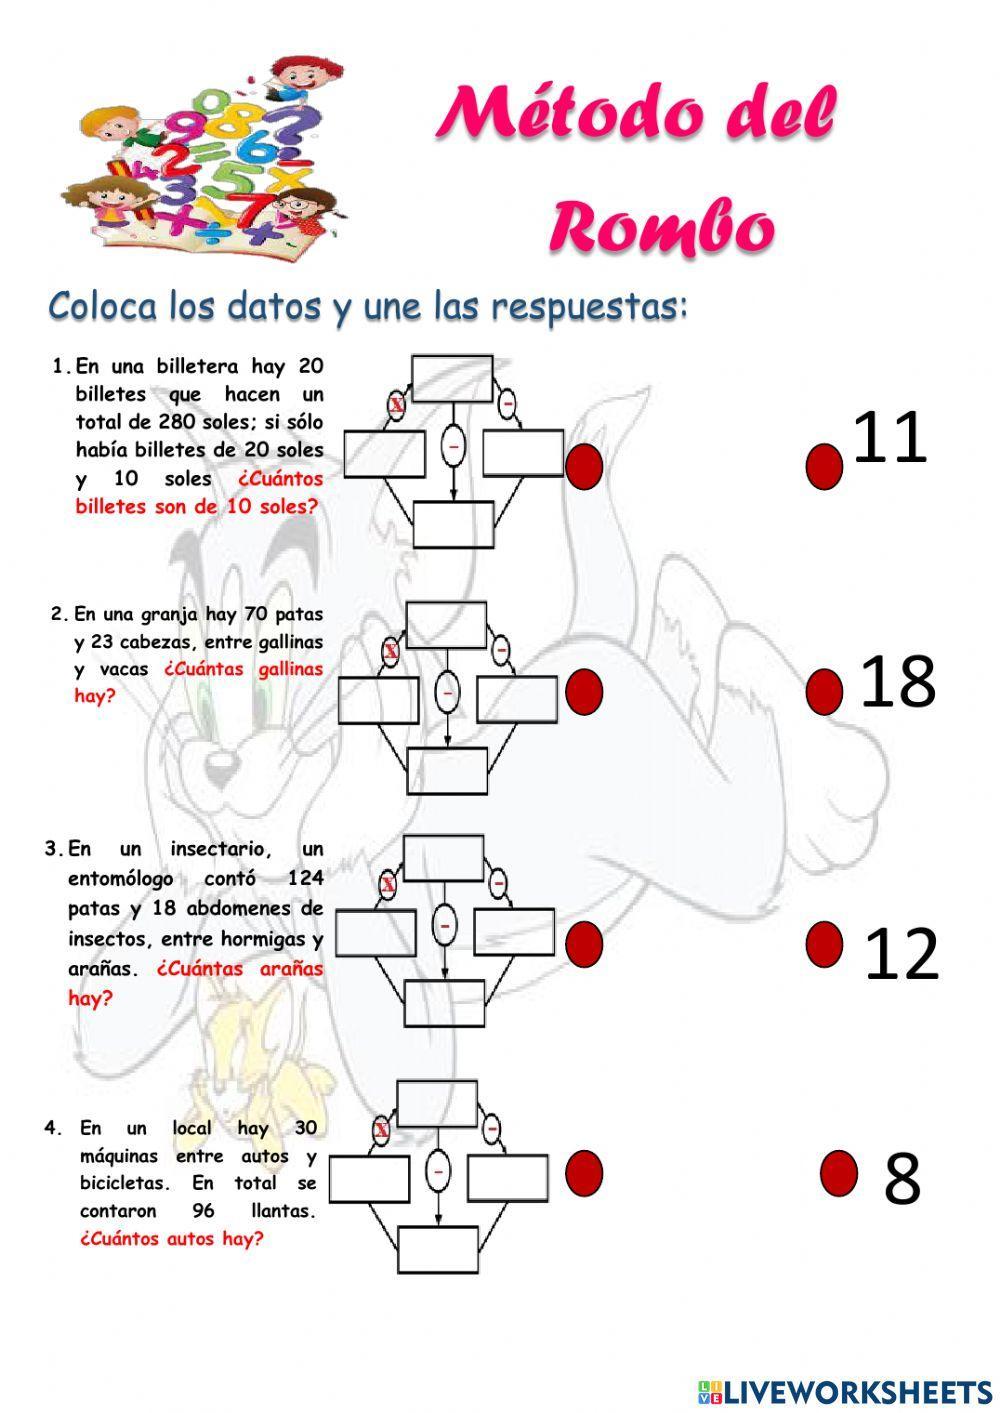 Método del Rombo